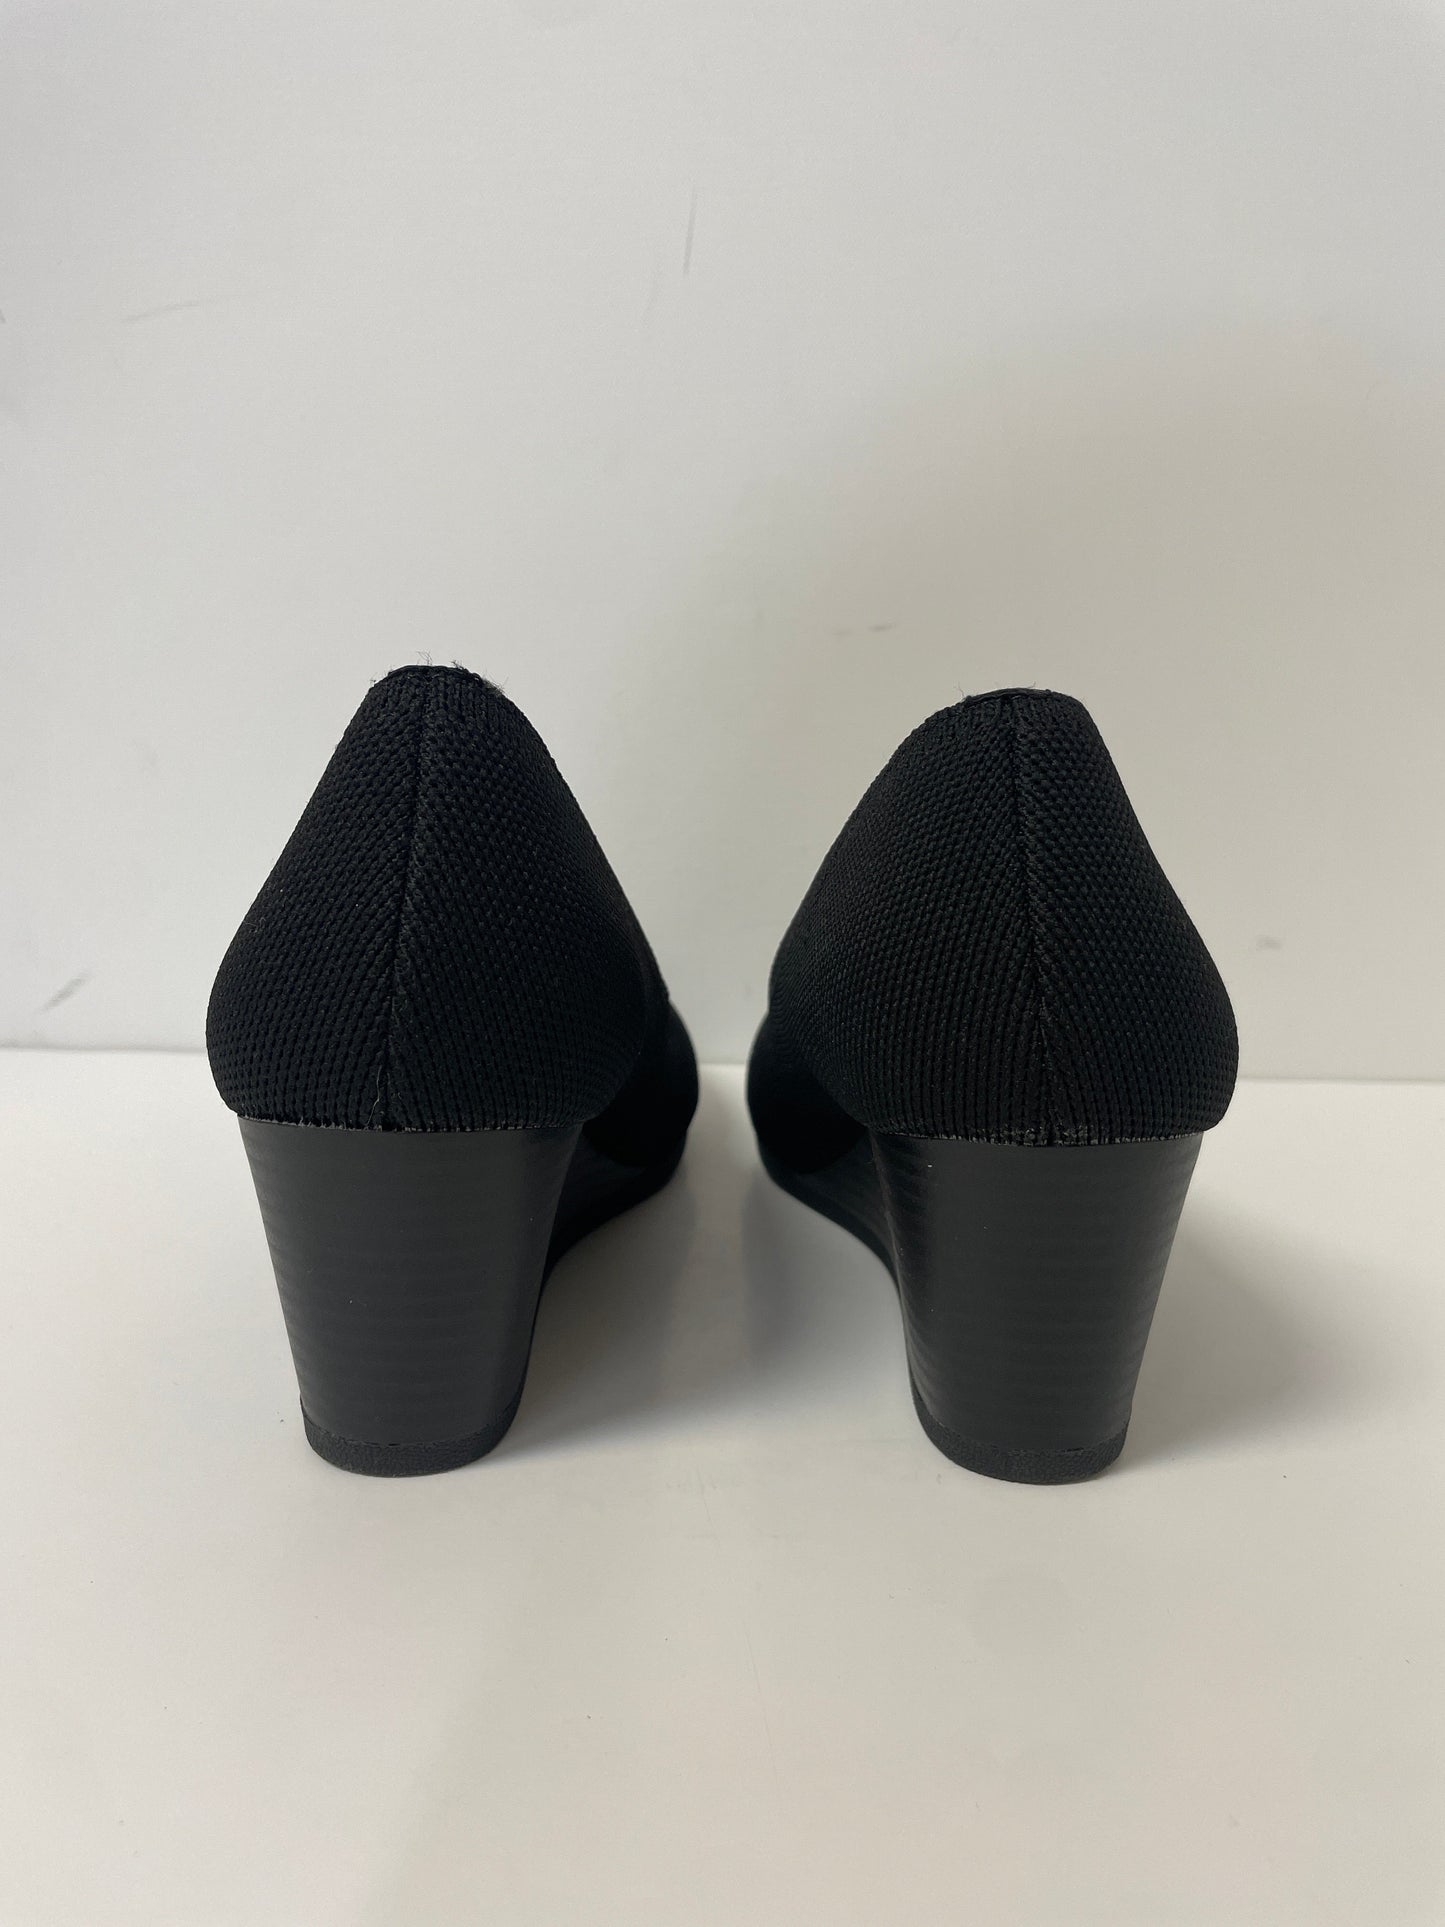 Black Shoes Heels Block Jelly Pop, Size 7.5